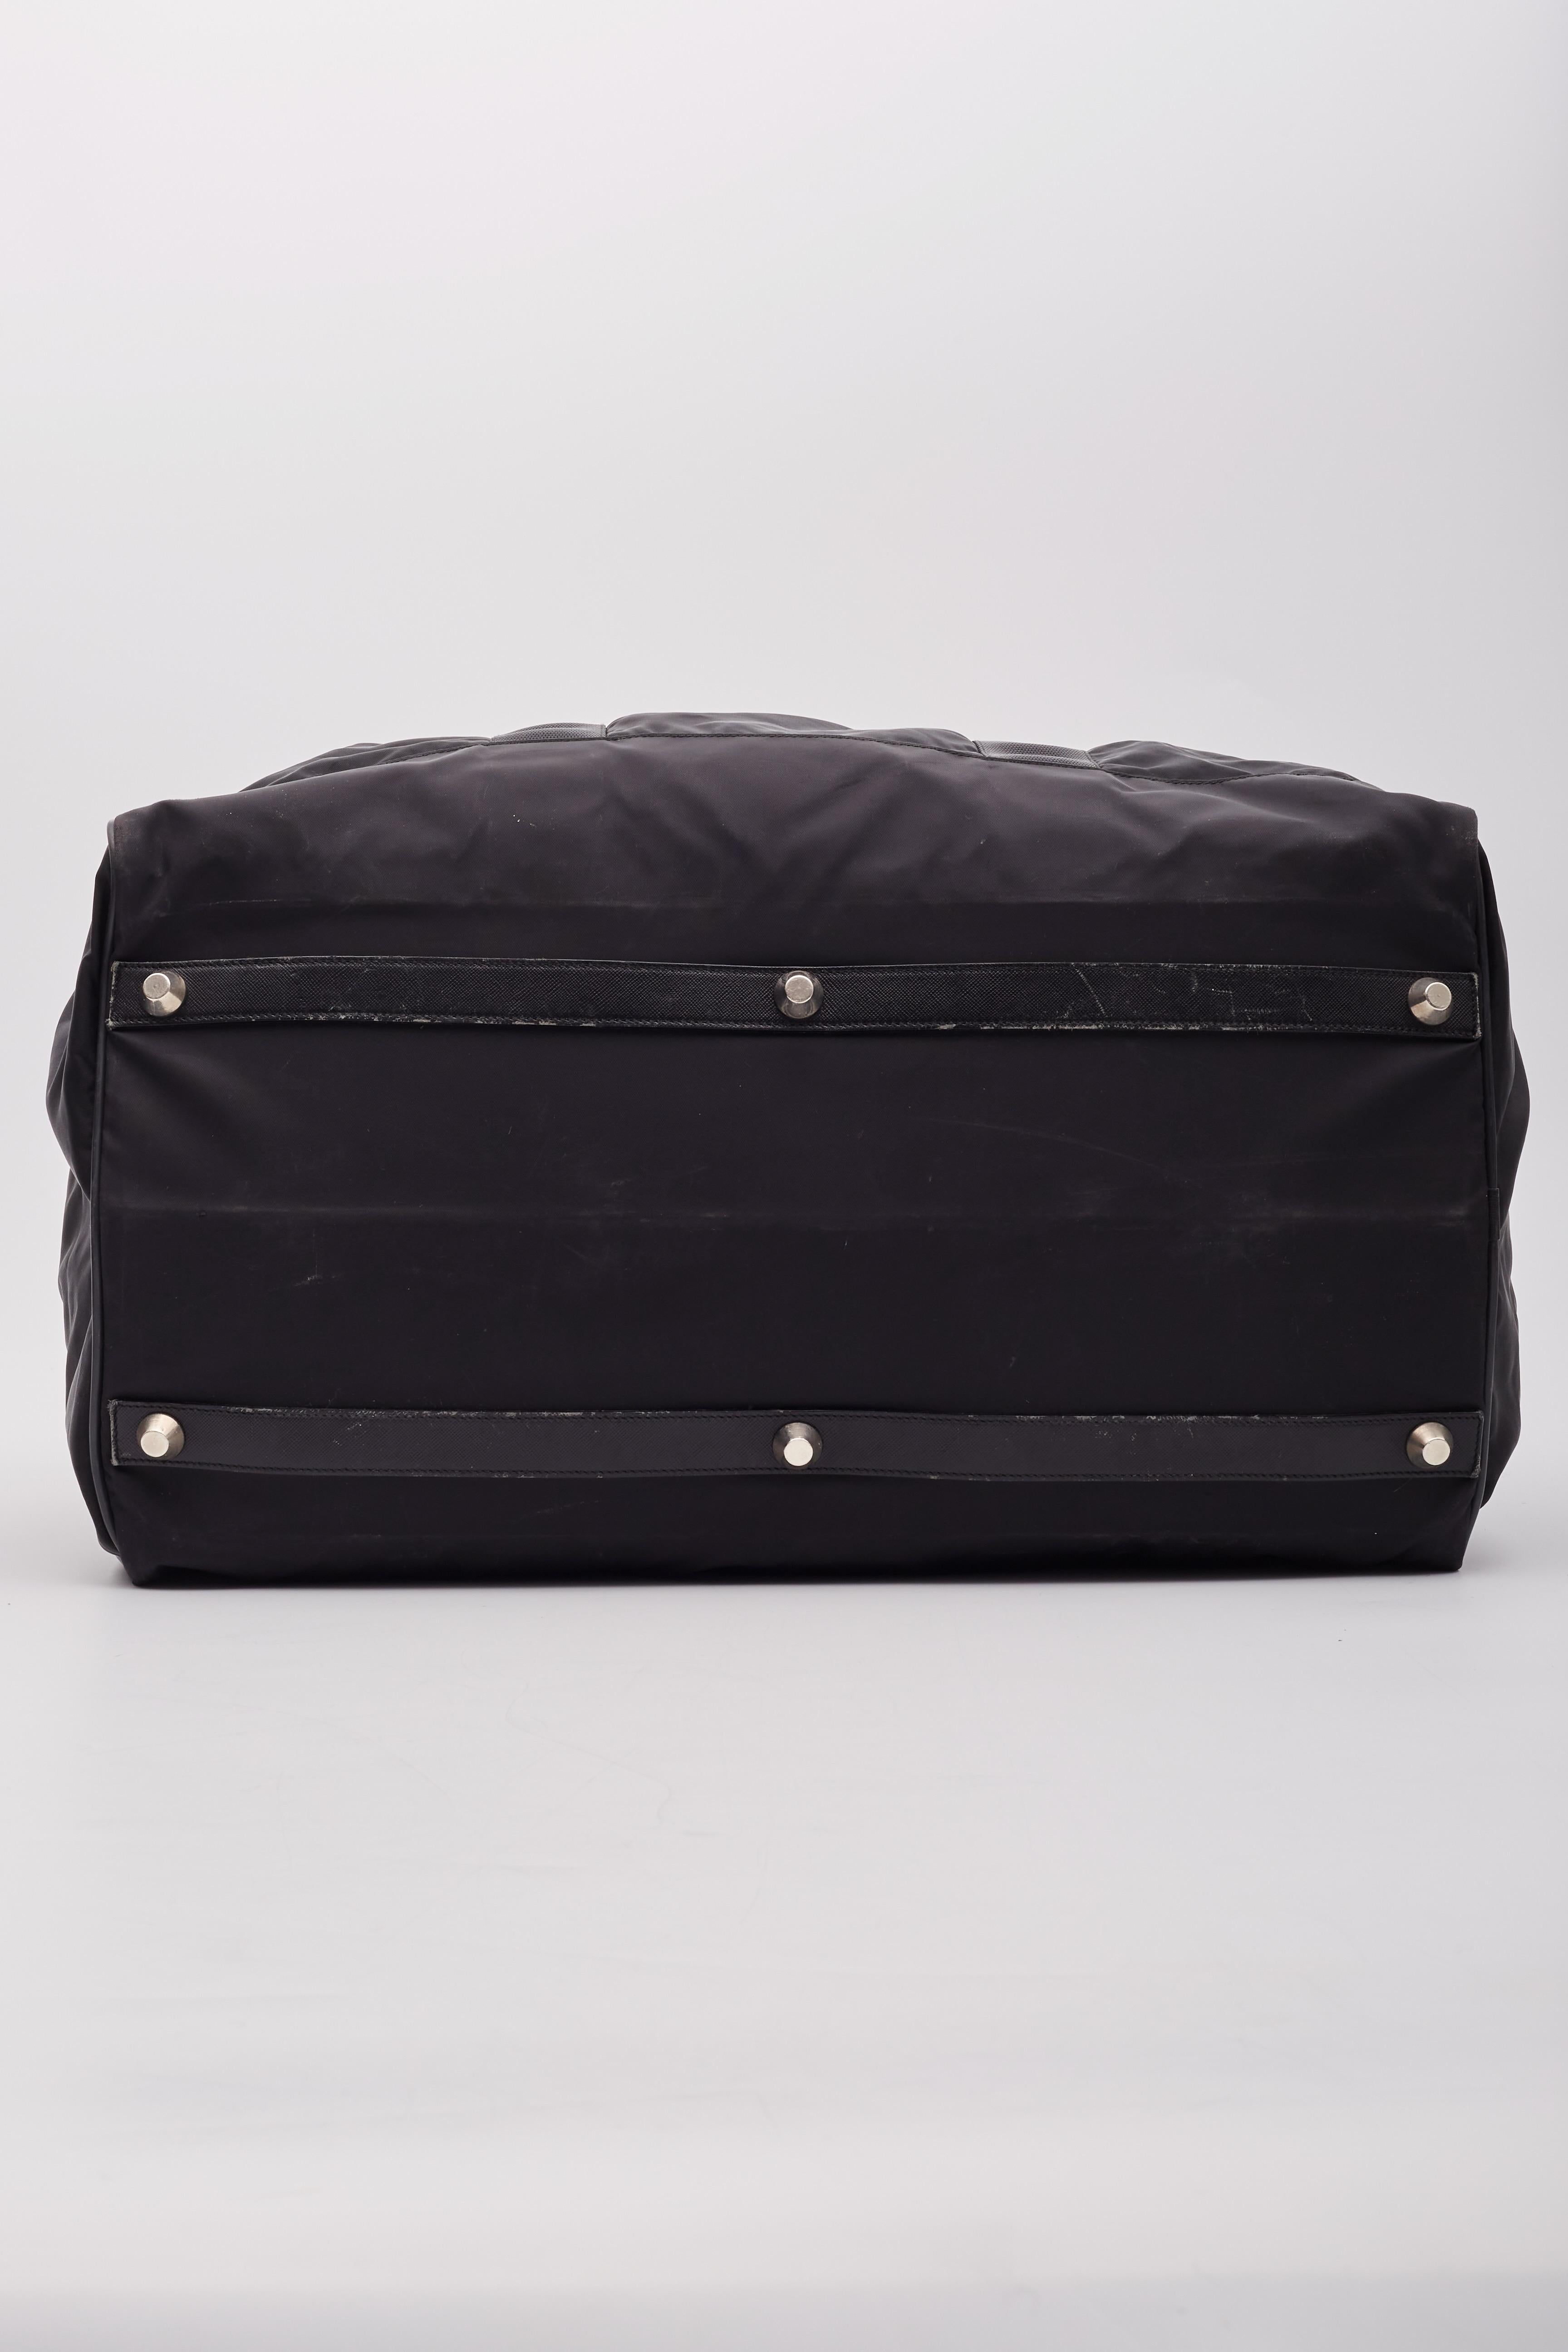 Prada Black Nylon Duffle Sports Weekender Bag For Sale 3